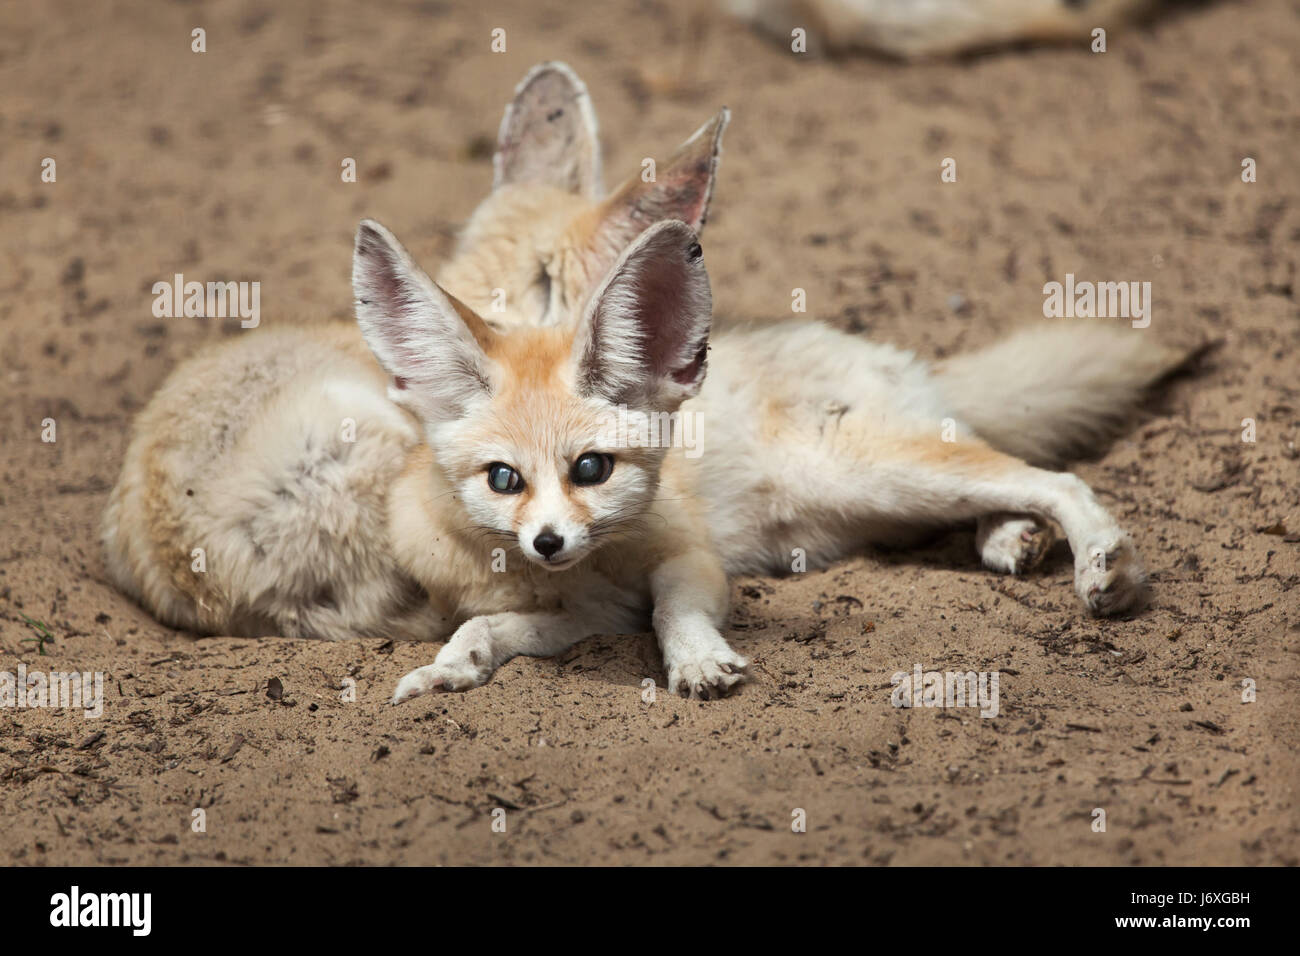 Fennec foxes (Vulpes zerda). Wildlife animal. Stock Photo